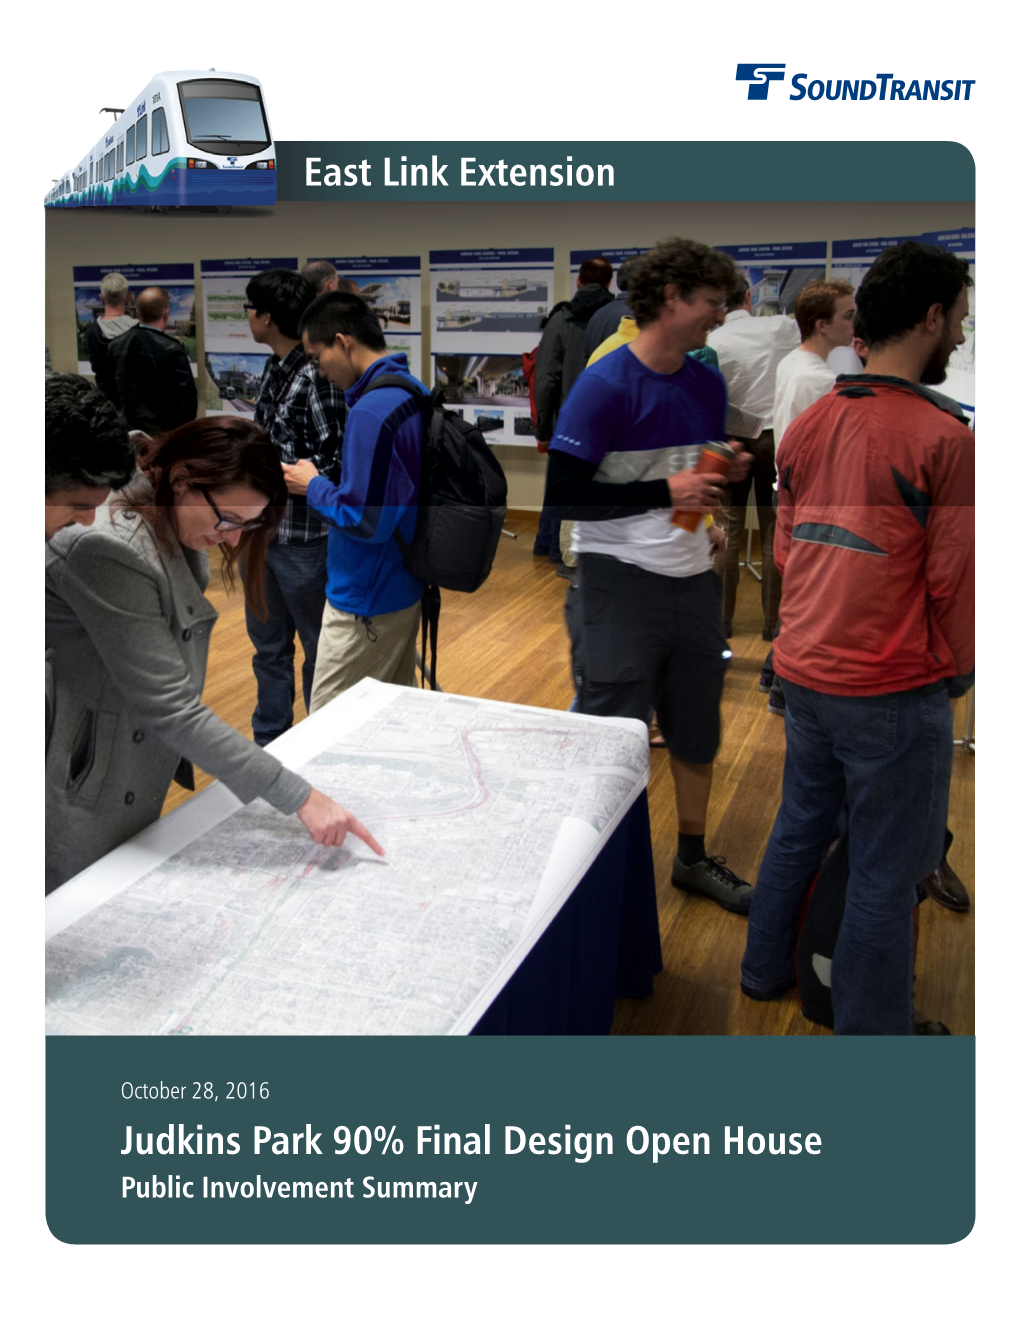 Judkins Park 90% Final Design Open House East Link Extension